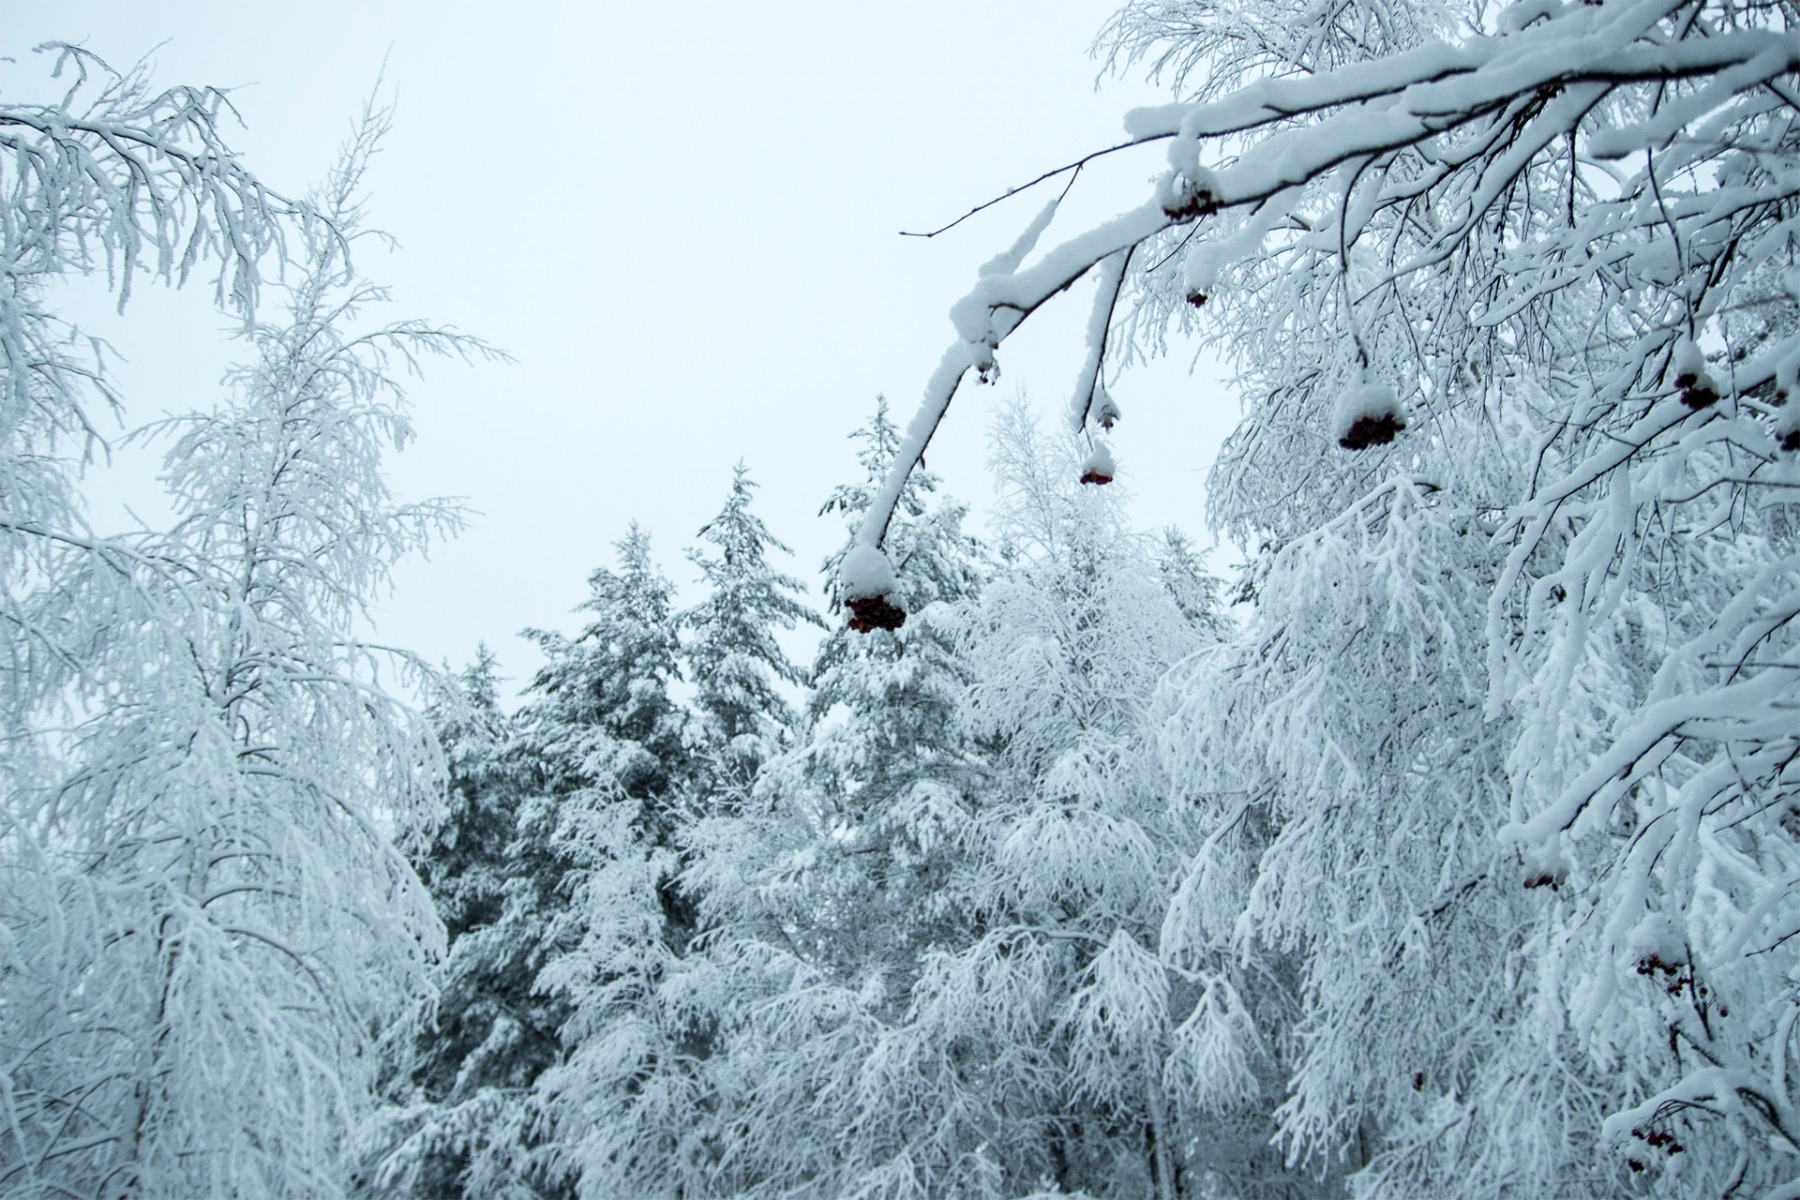 Рябина под снегом... | Фотограф Константин Konstanto | foto.by фото.бай